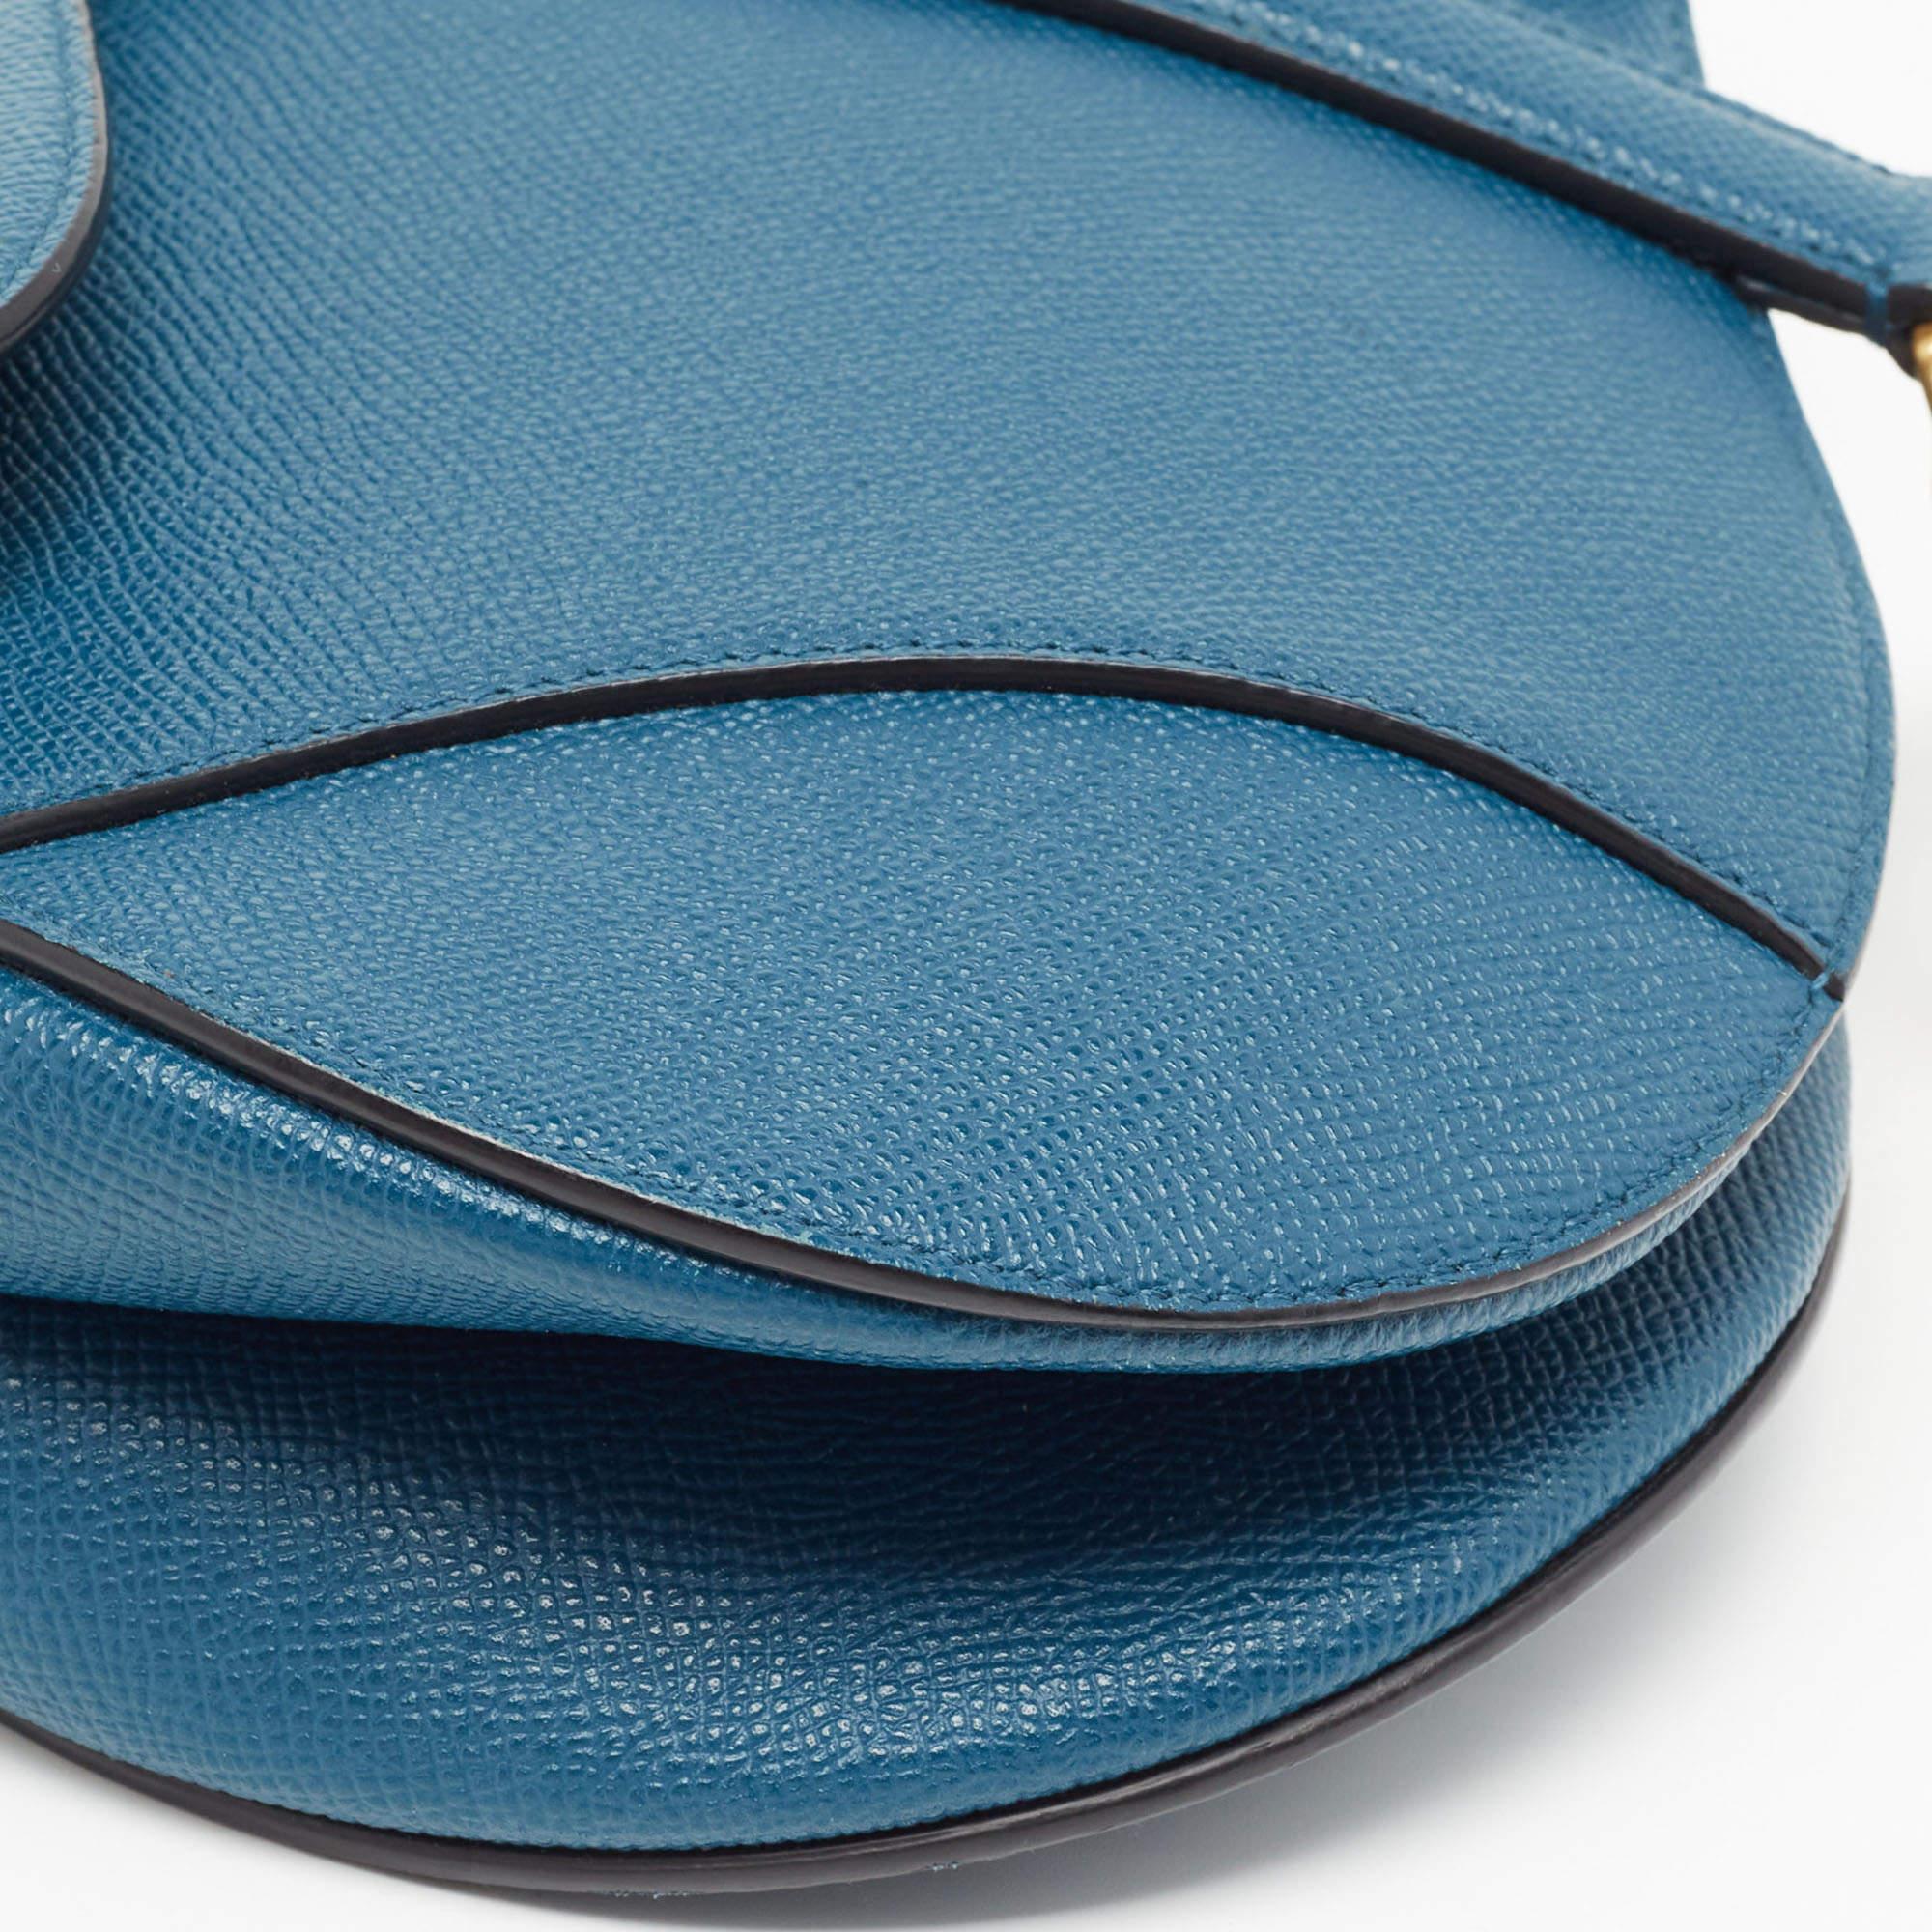 Dior Bleu Teal Leather Saddle Shoulder Bag (Sac à bandoulière en cuir) 2